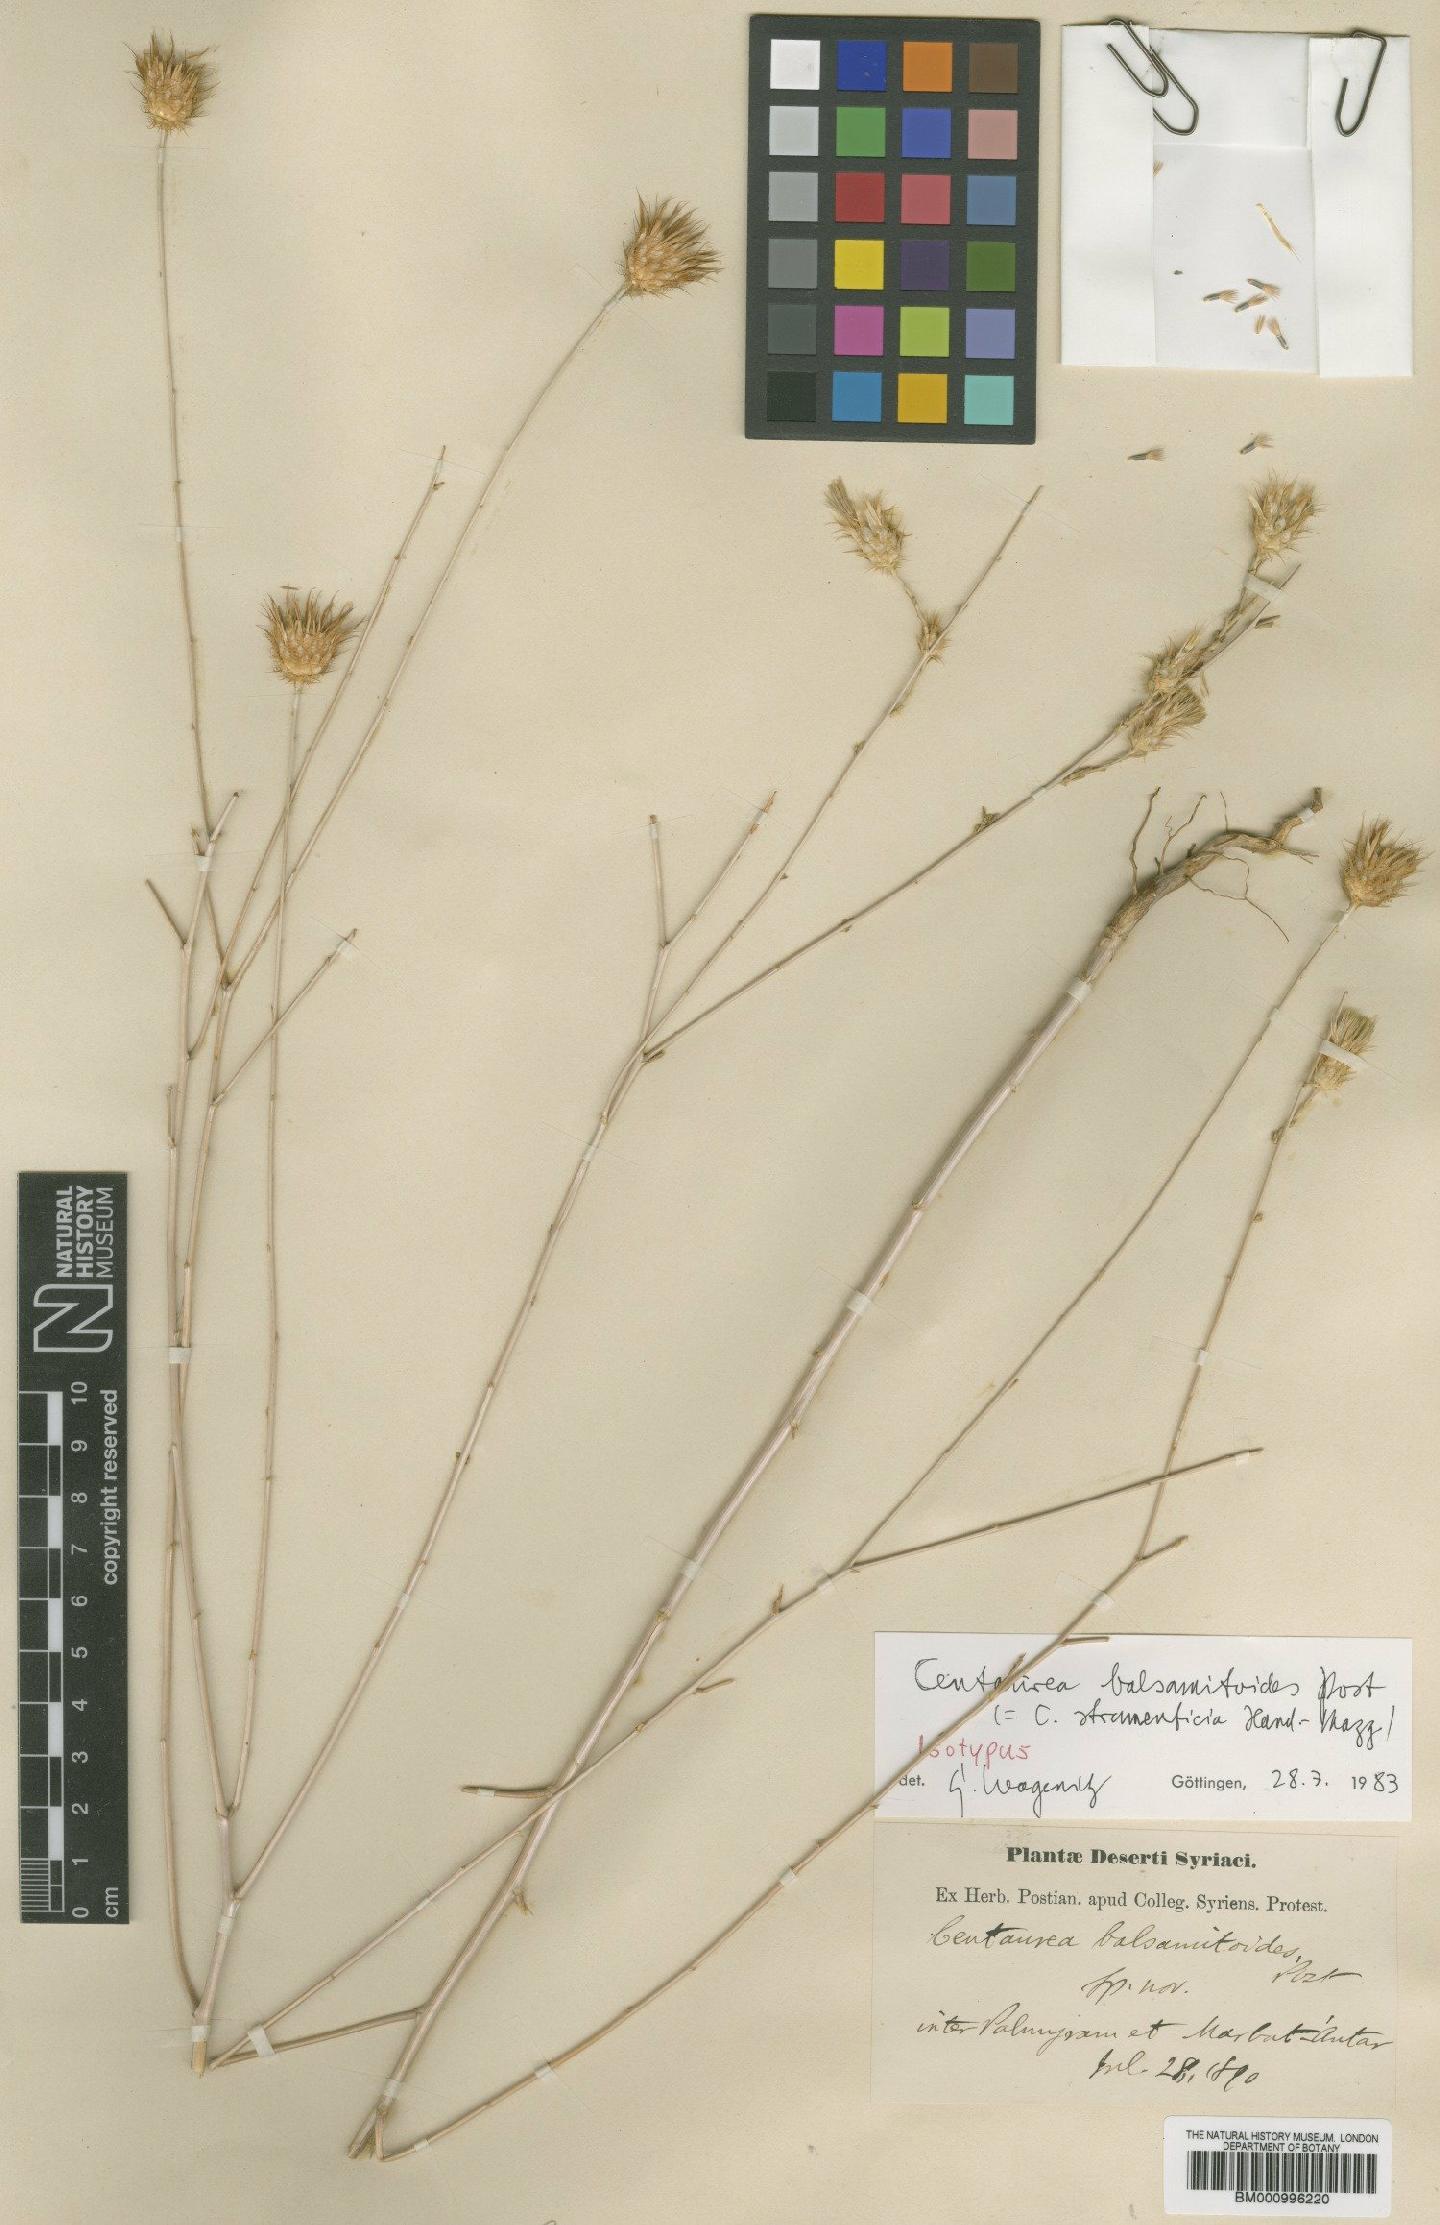 To NHMUK collection (Centaurea balsamitoidea Post; Isotype; NHMUK:ecatalogue:480213)